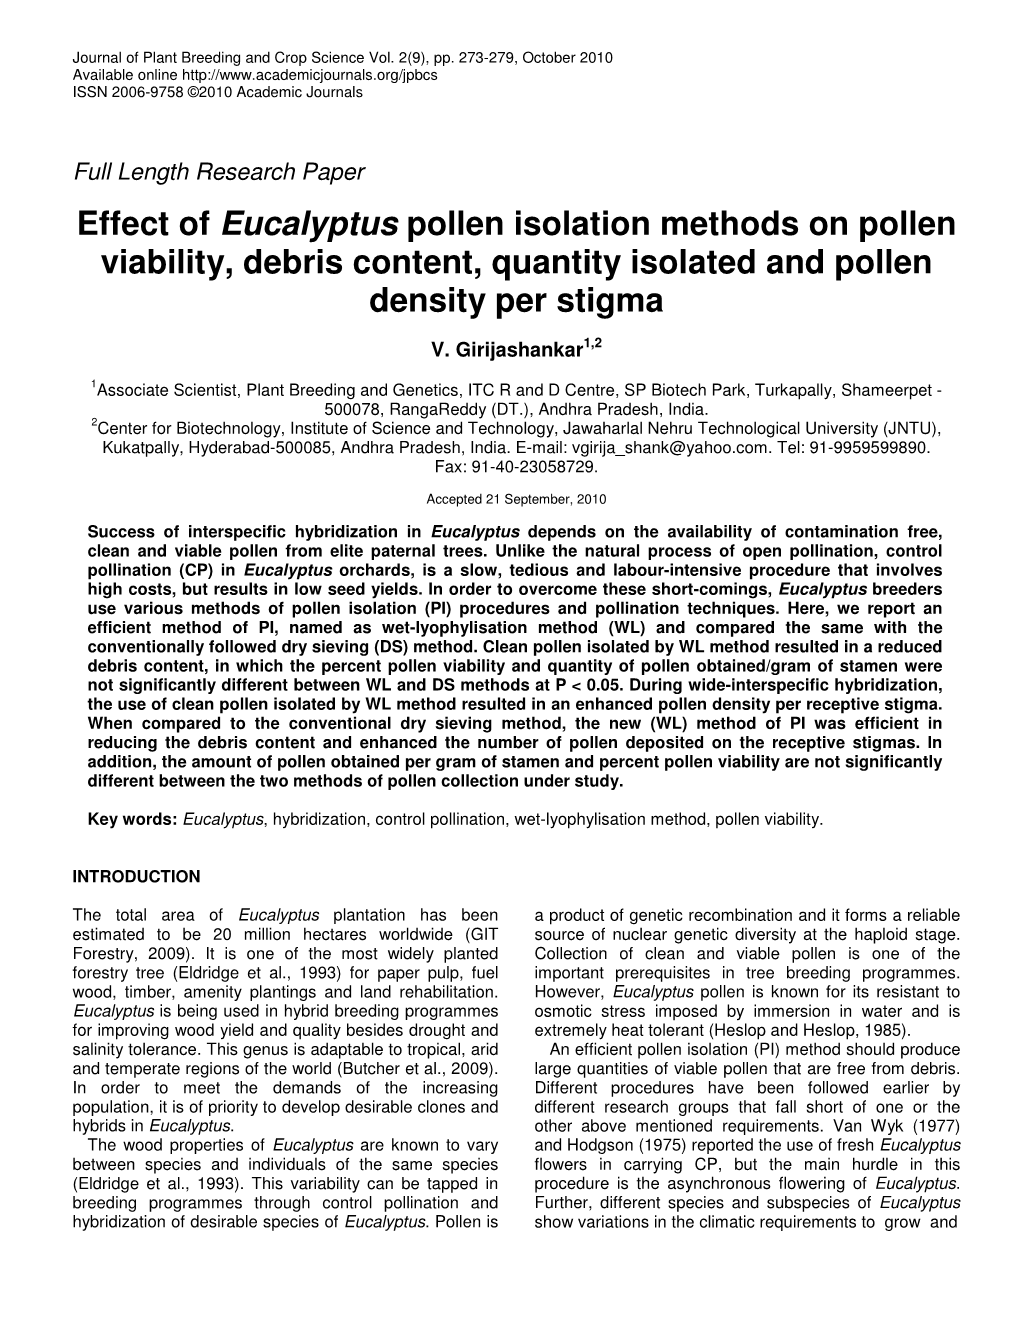 Effect of Eucalyptus Pollen Isolation Methods on Pollen Viability, Debris Content, Quantity Isolated and Pollen Density Per Stigma